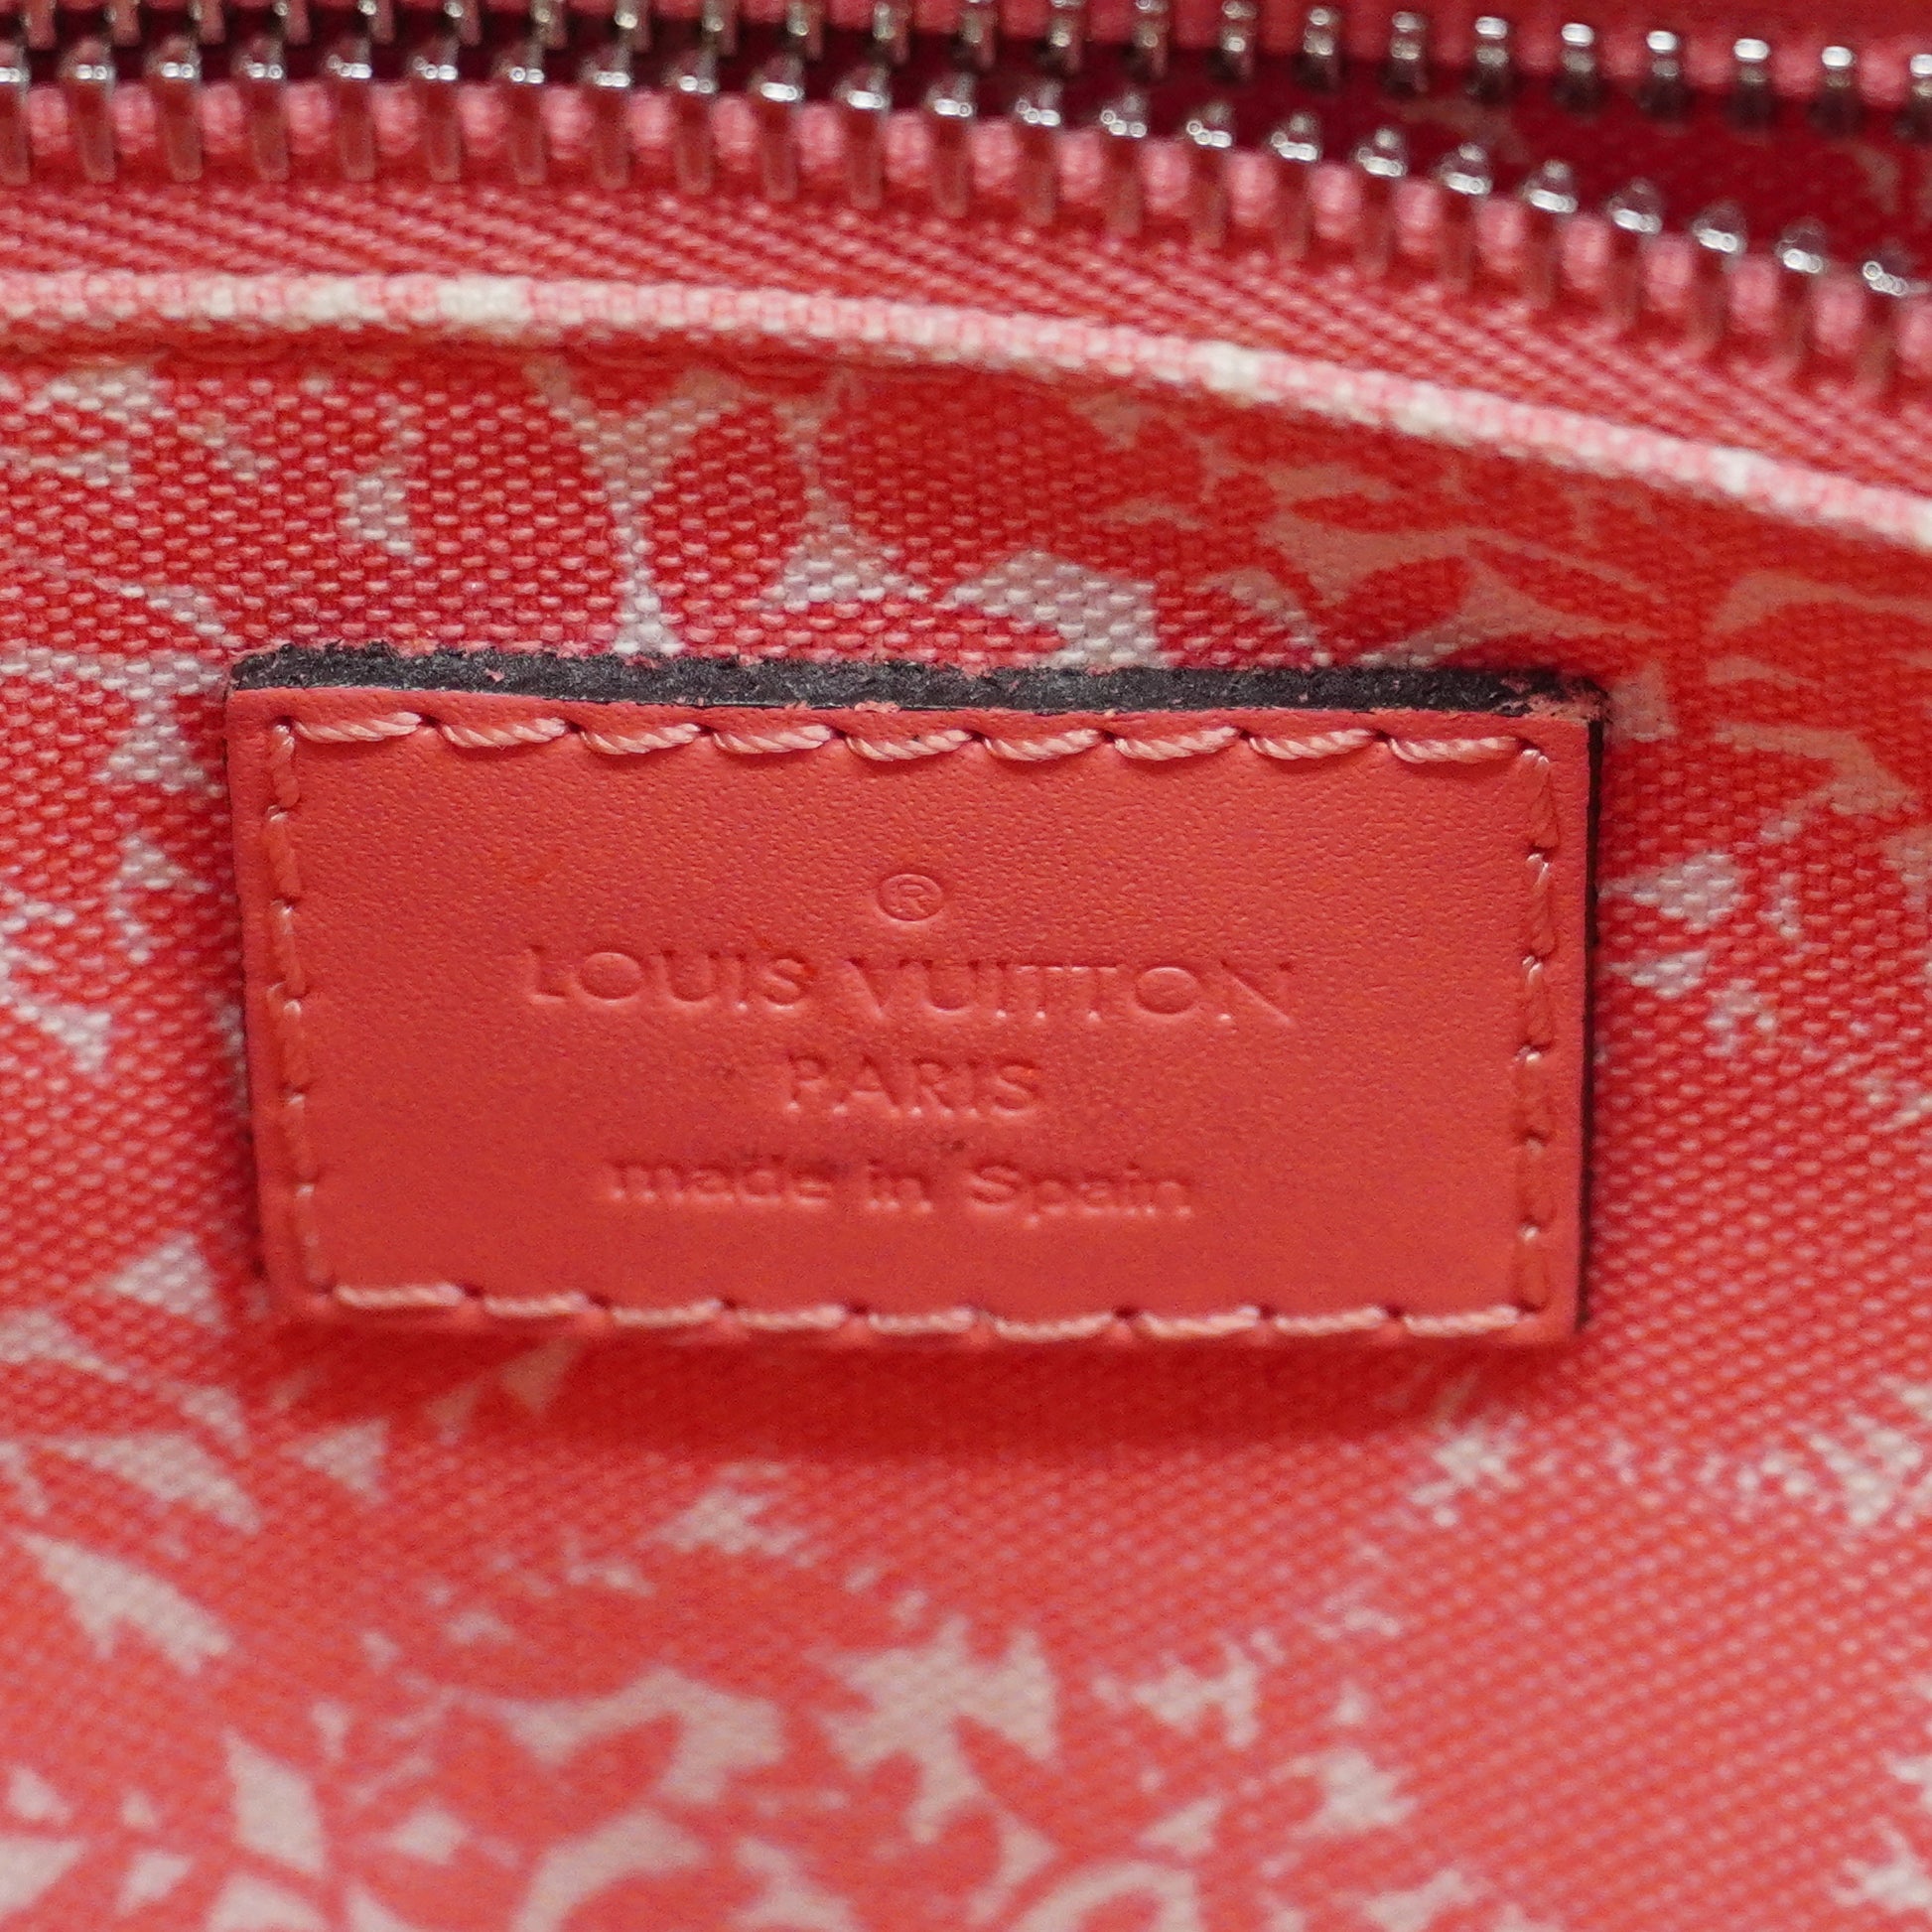 LOUIS VUITTON Louis Vuitton Summer Collection 2014 Hippopotamus PM